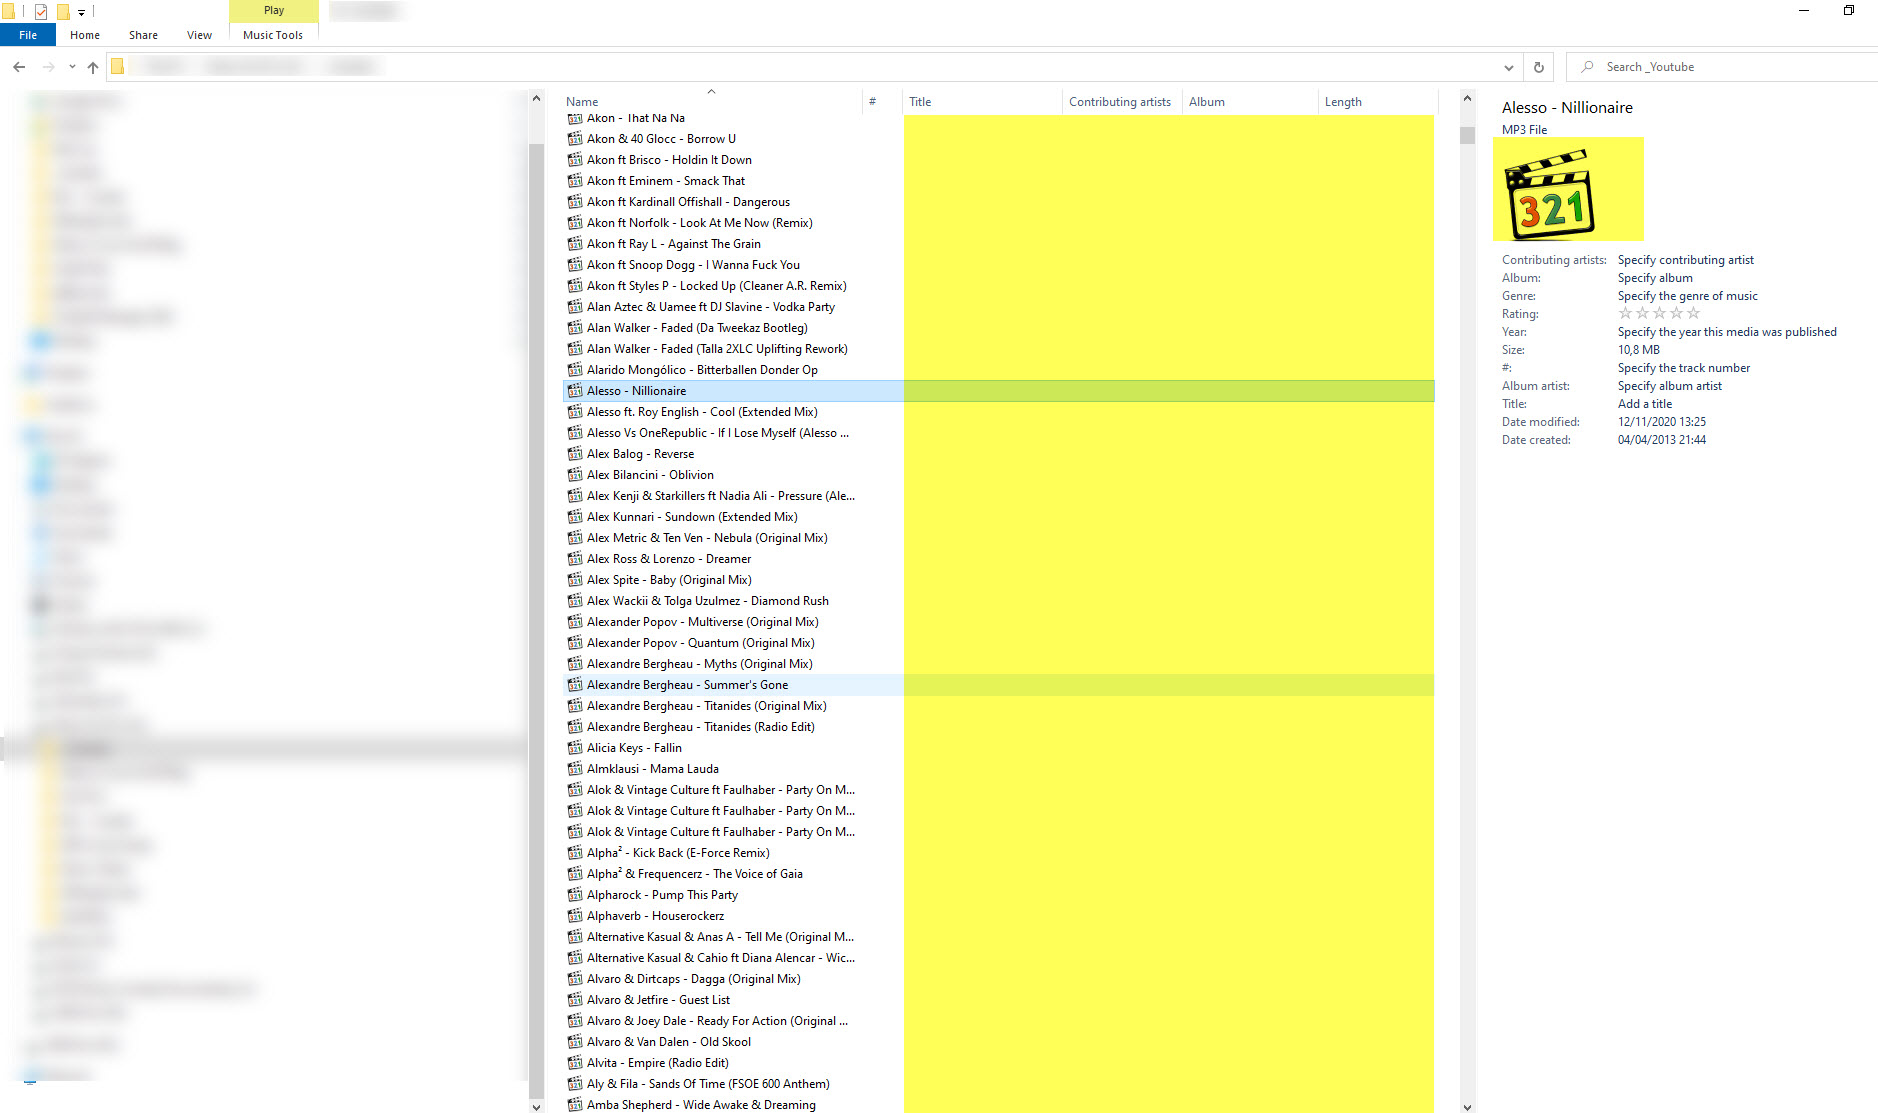 Windows 10 Explorer - No thumbnails and no data like 'lenght' for MP3 / MP4 / PDF f70ef68e-5974-4961-ba1d-5d65ff9b3e13?upload=true.jpg